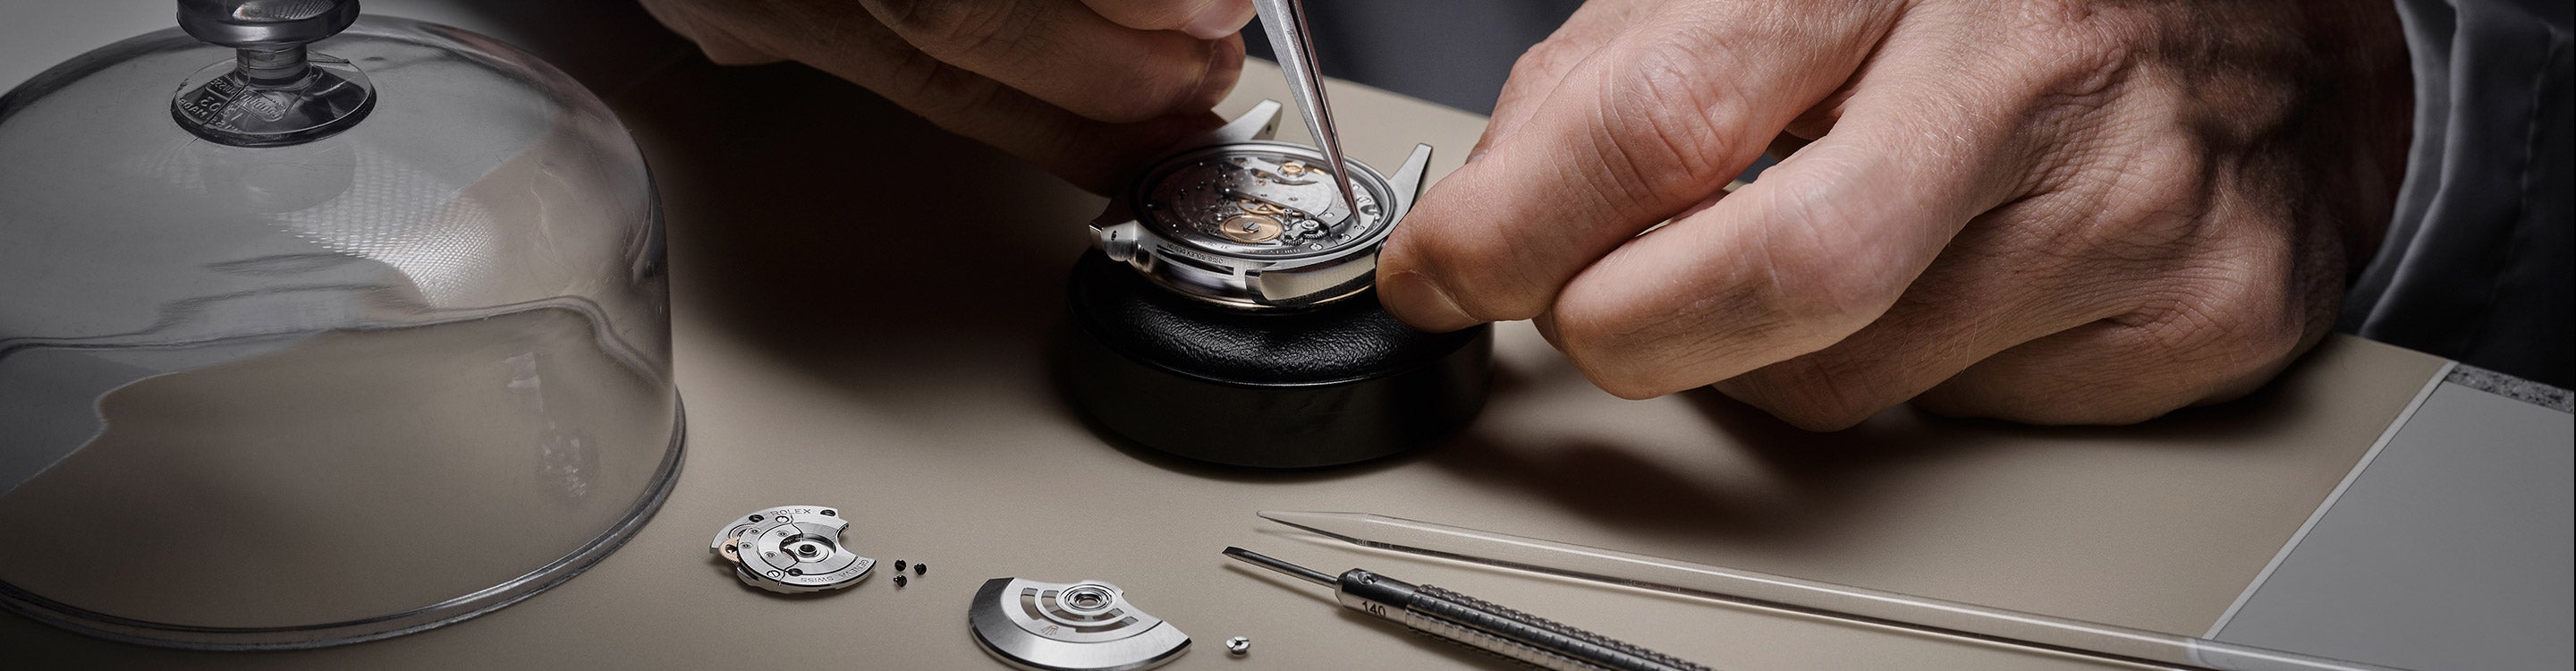 Jeweler working on a watch